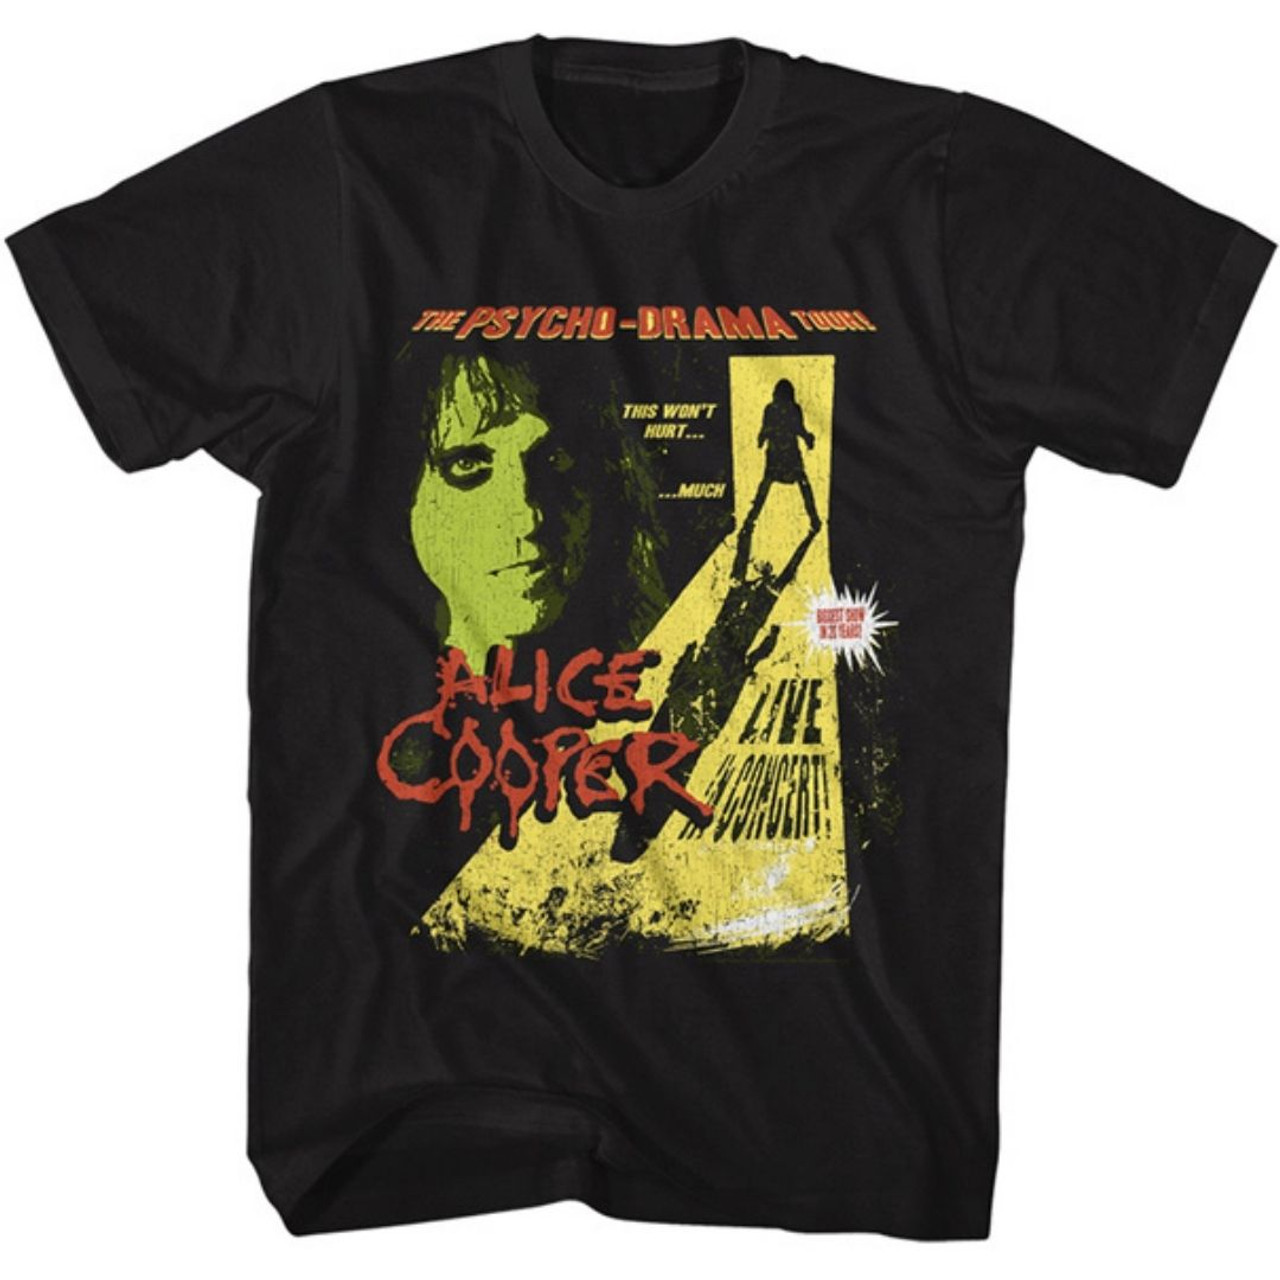 Vintage Alice Cooper Concert T-shirt - Psycho Drama Tour